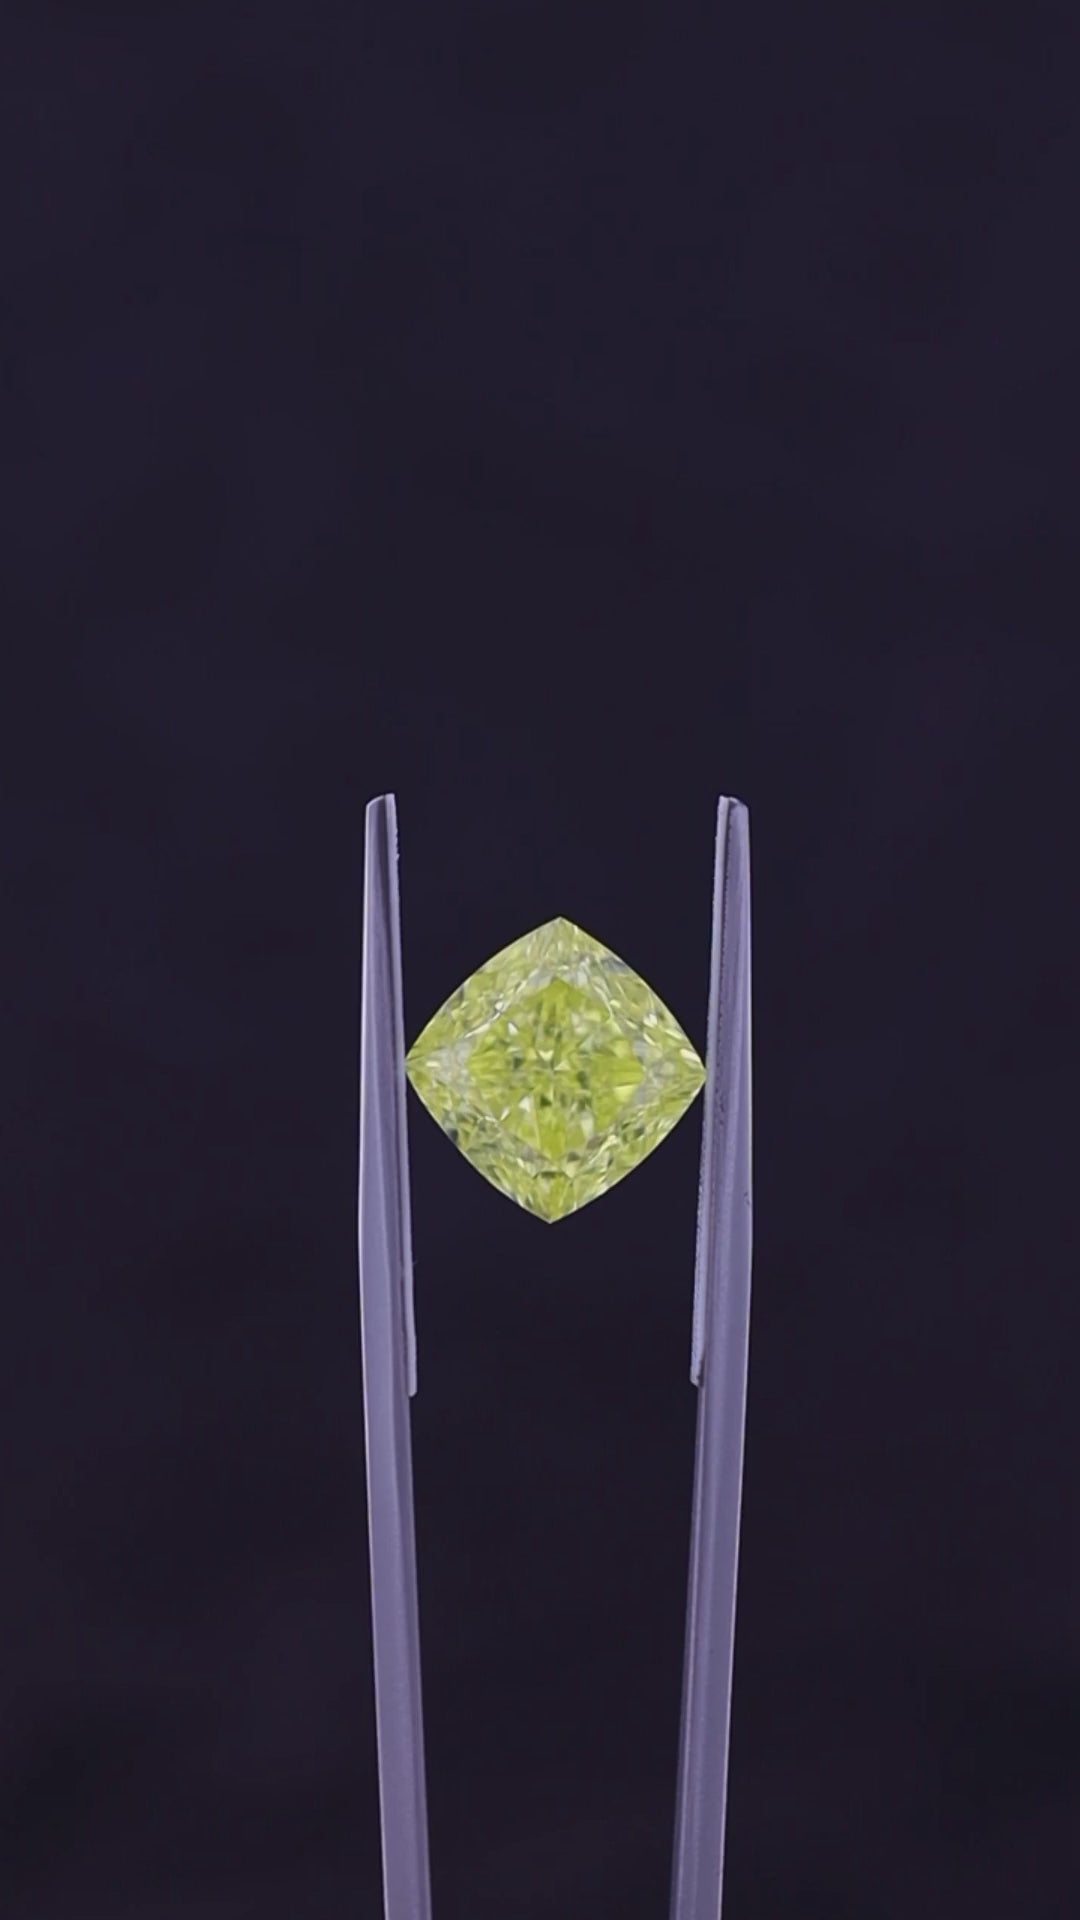 7.06 Carat Fancy Vivid Yellow Diamond | Atelier de Joyaux™ Geneva